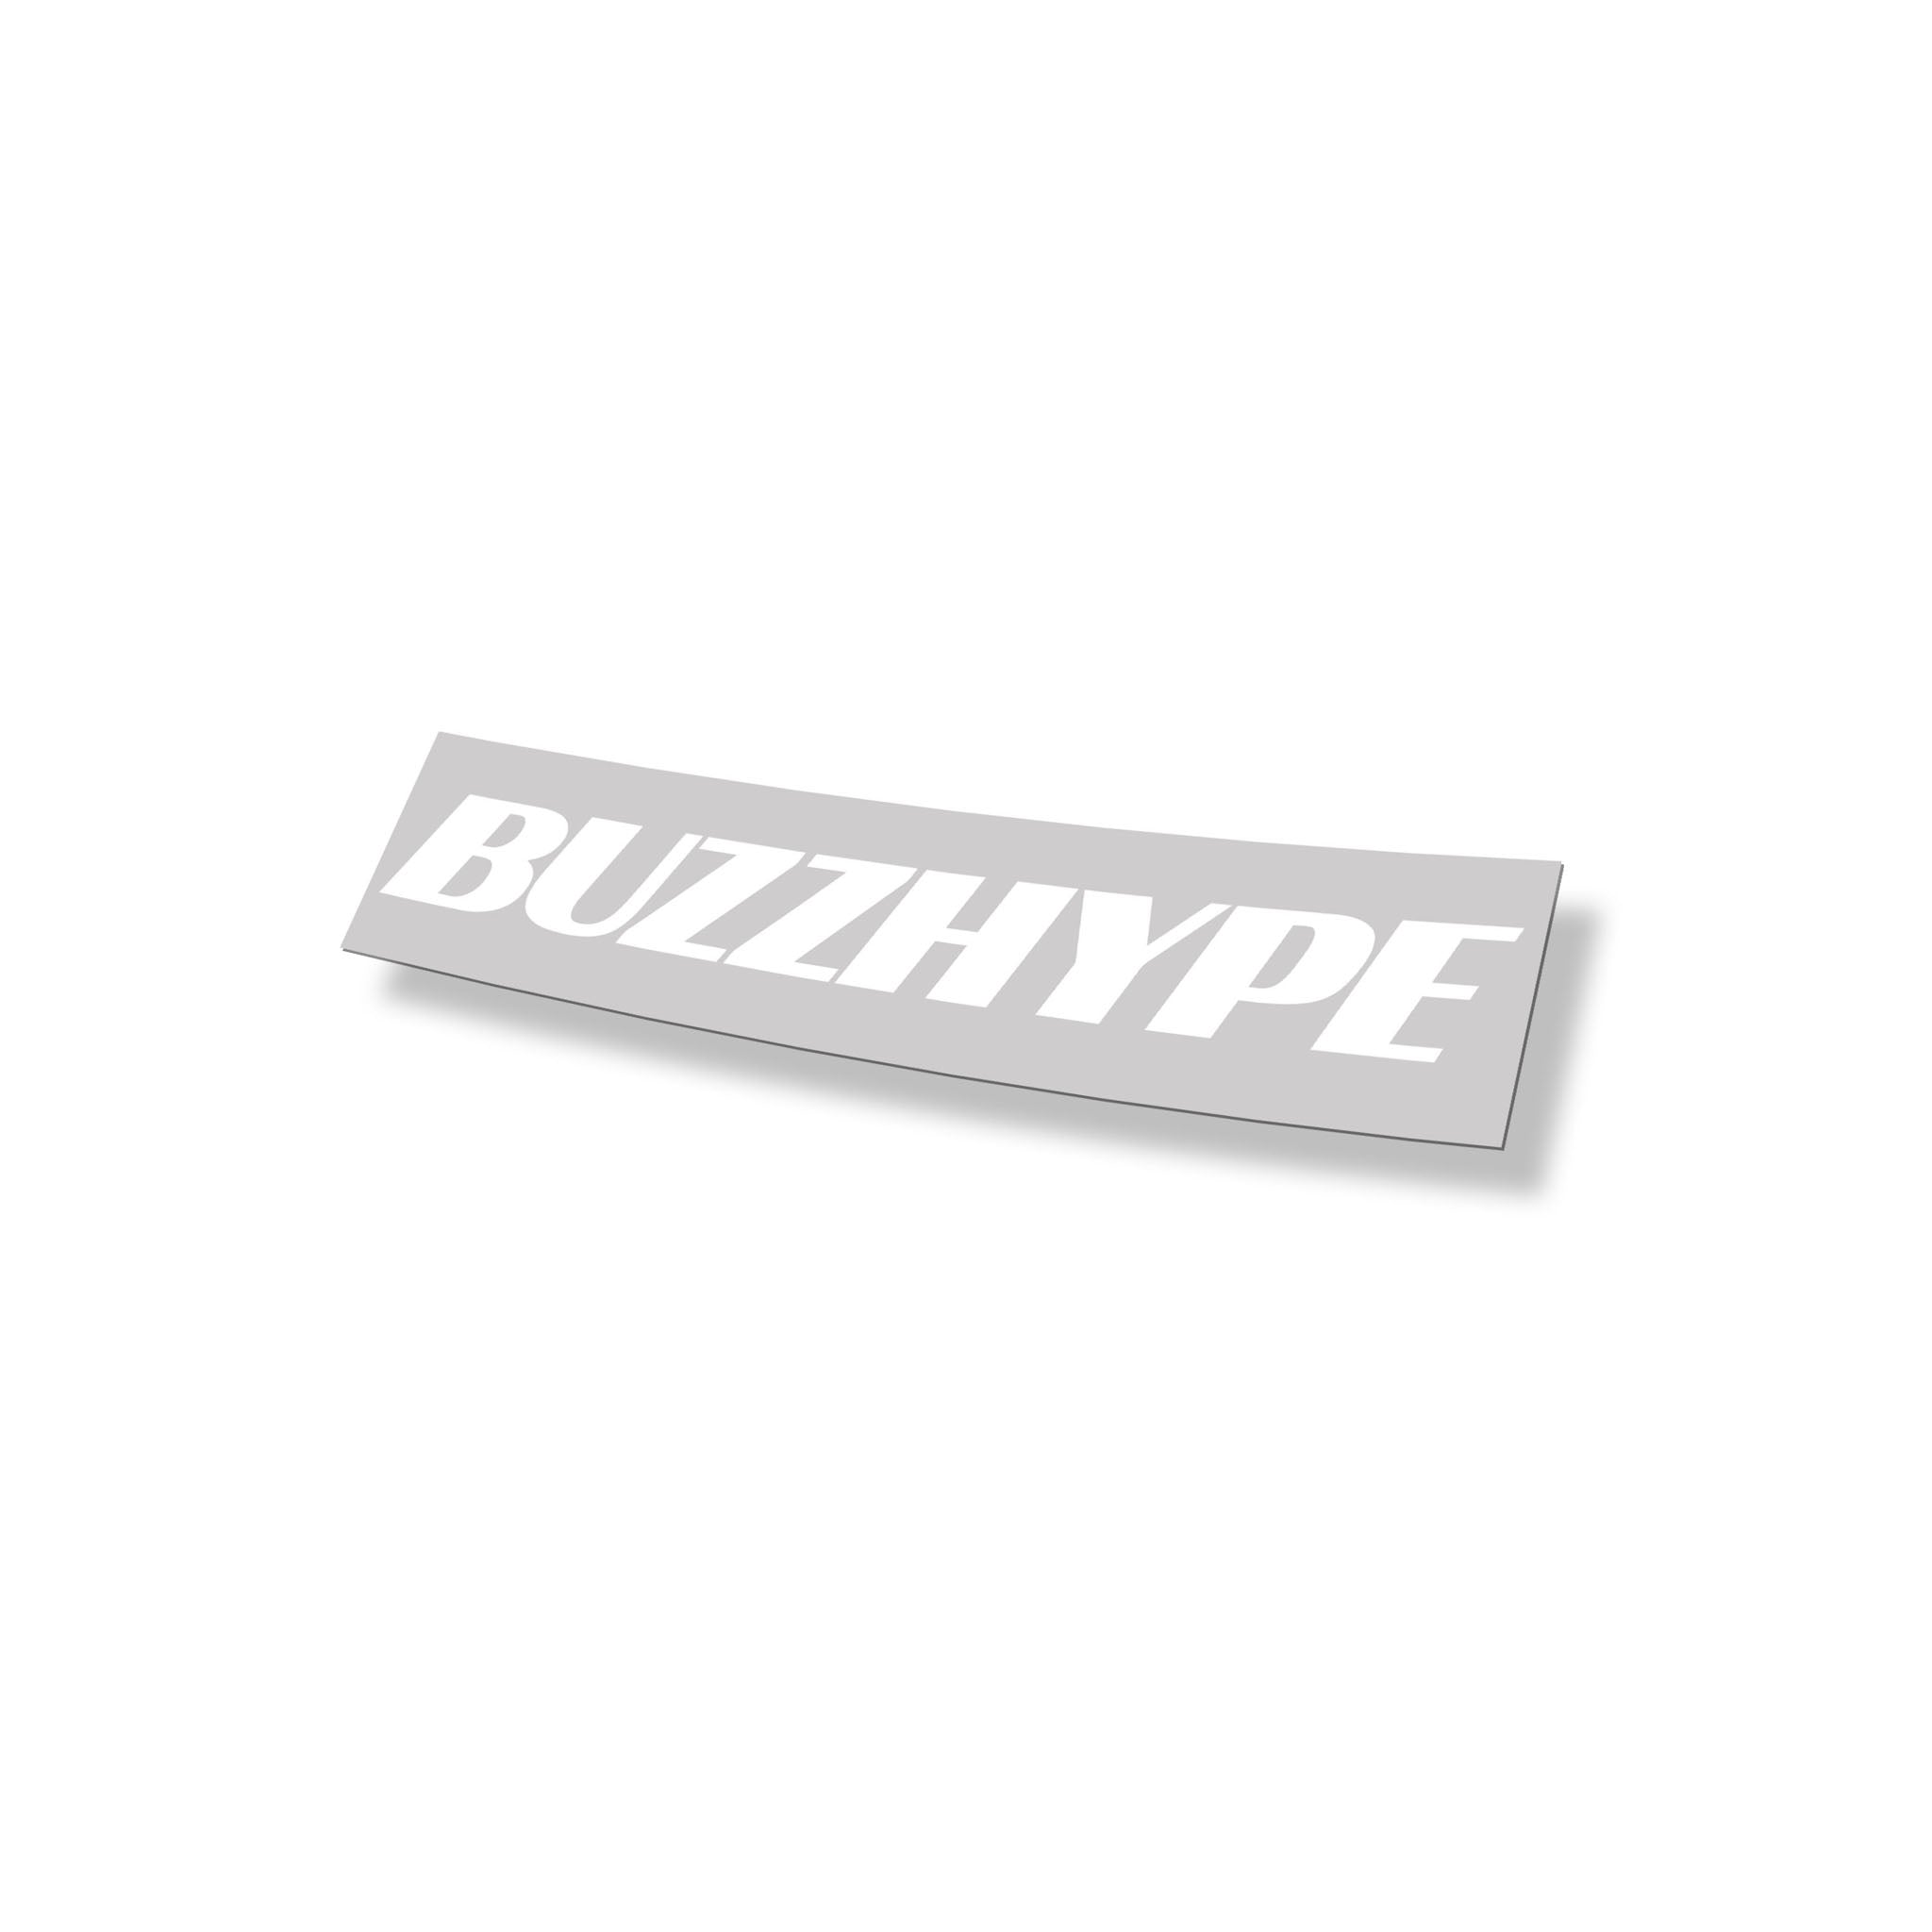 BUZZHYPE Type 1 White Sticker Large